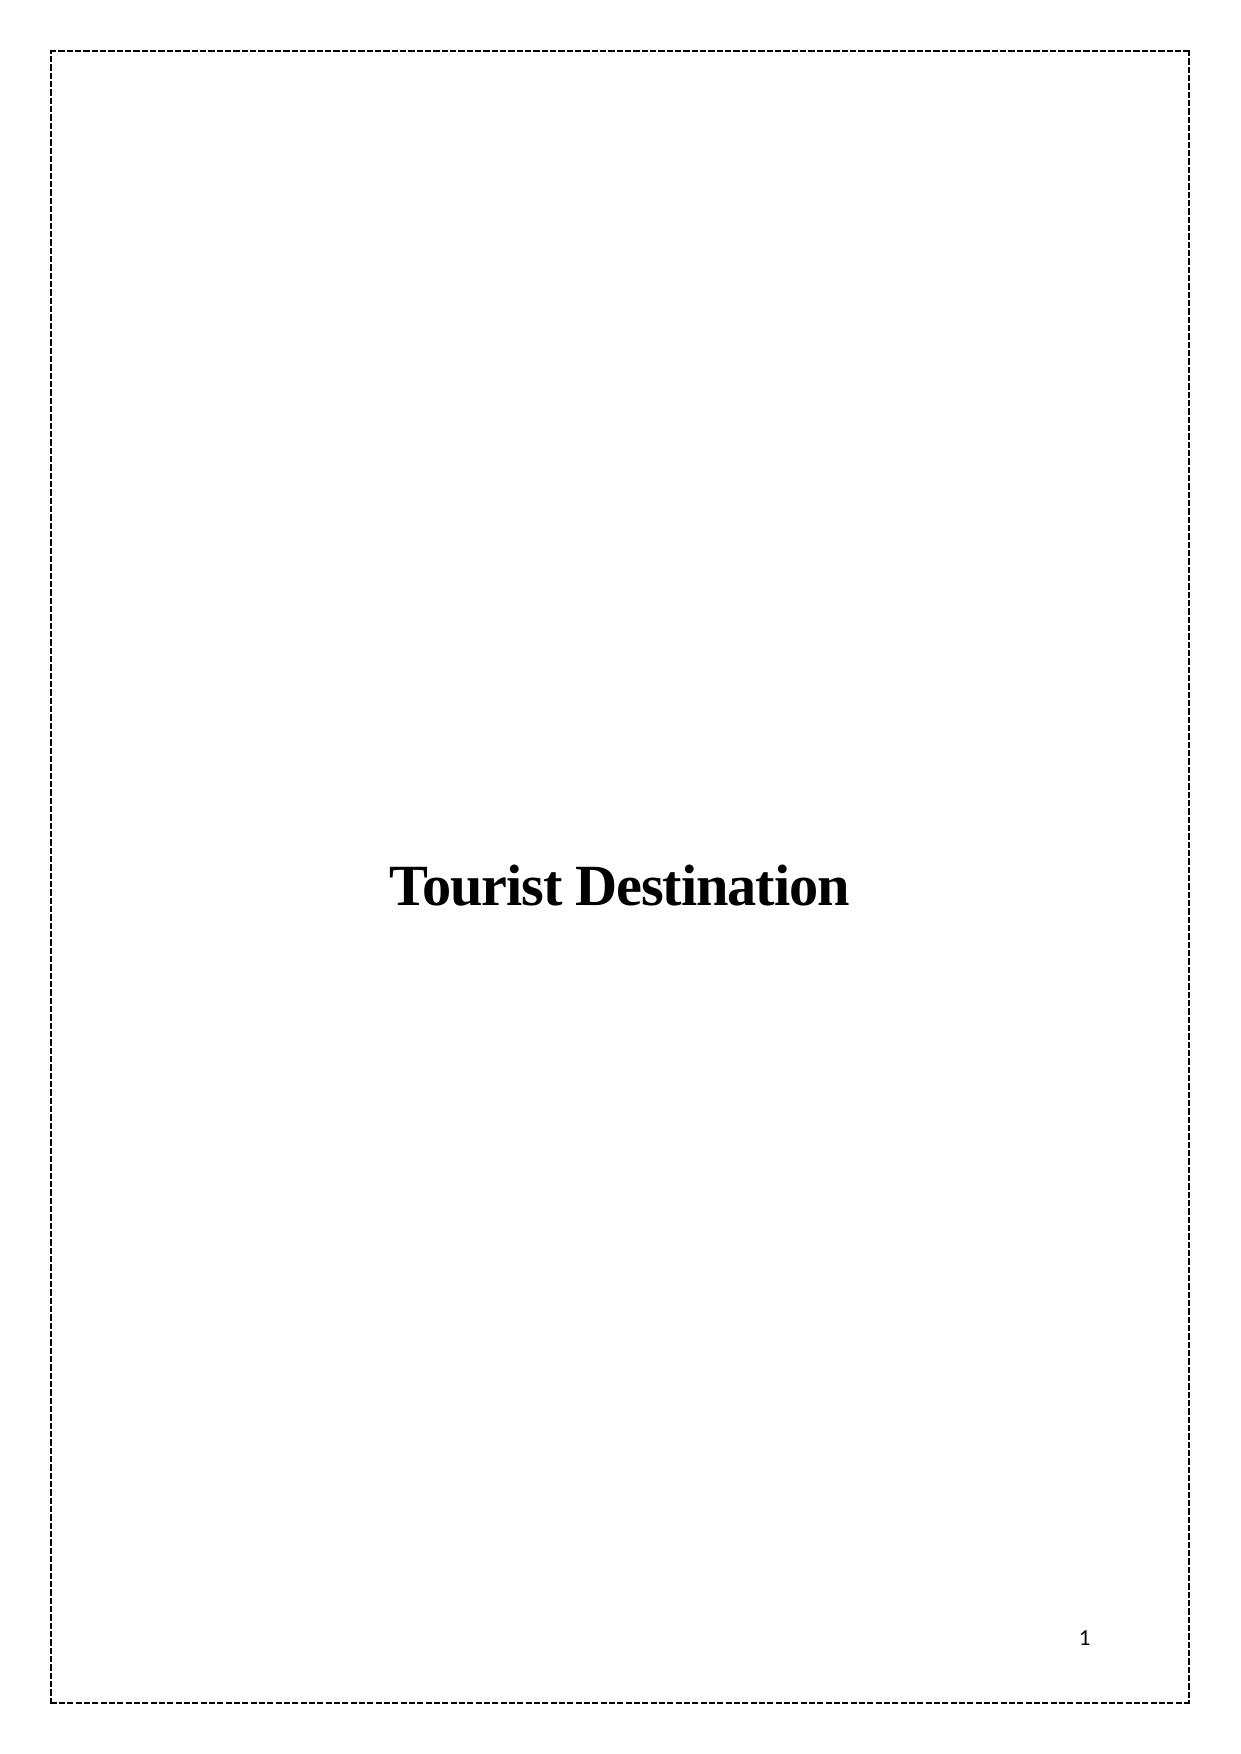 Tourist Destination Analysis_1